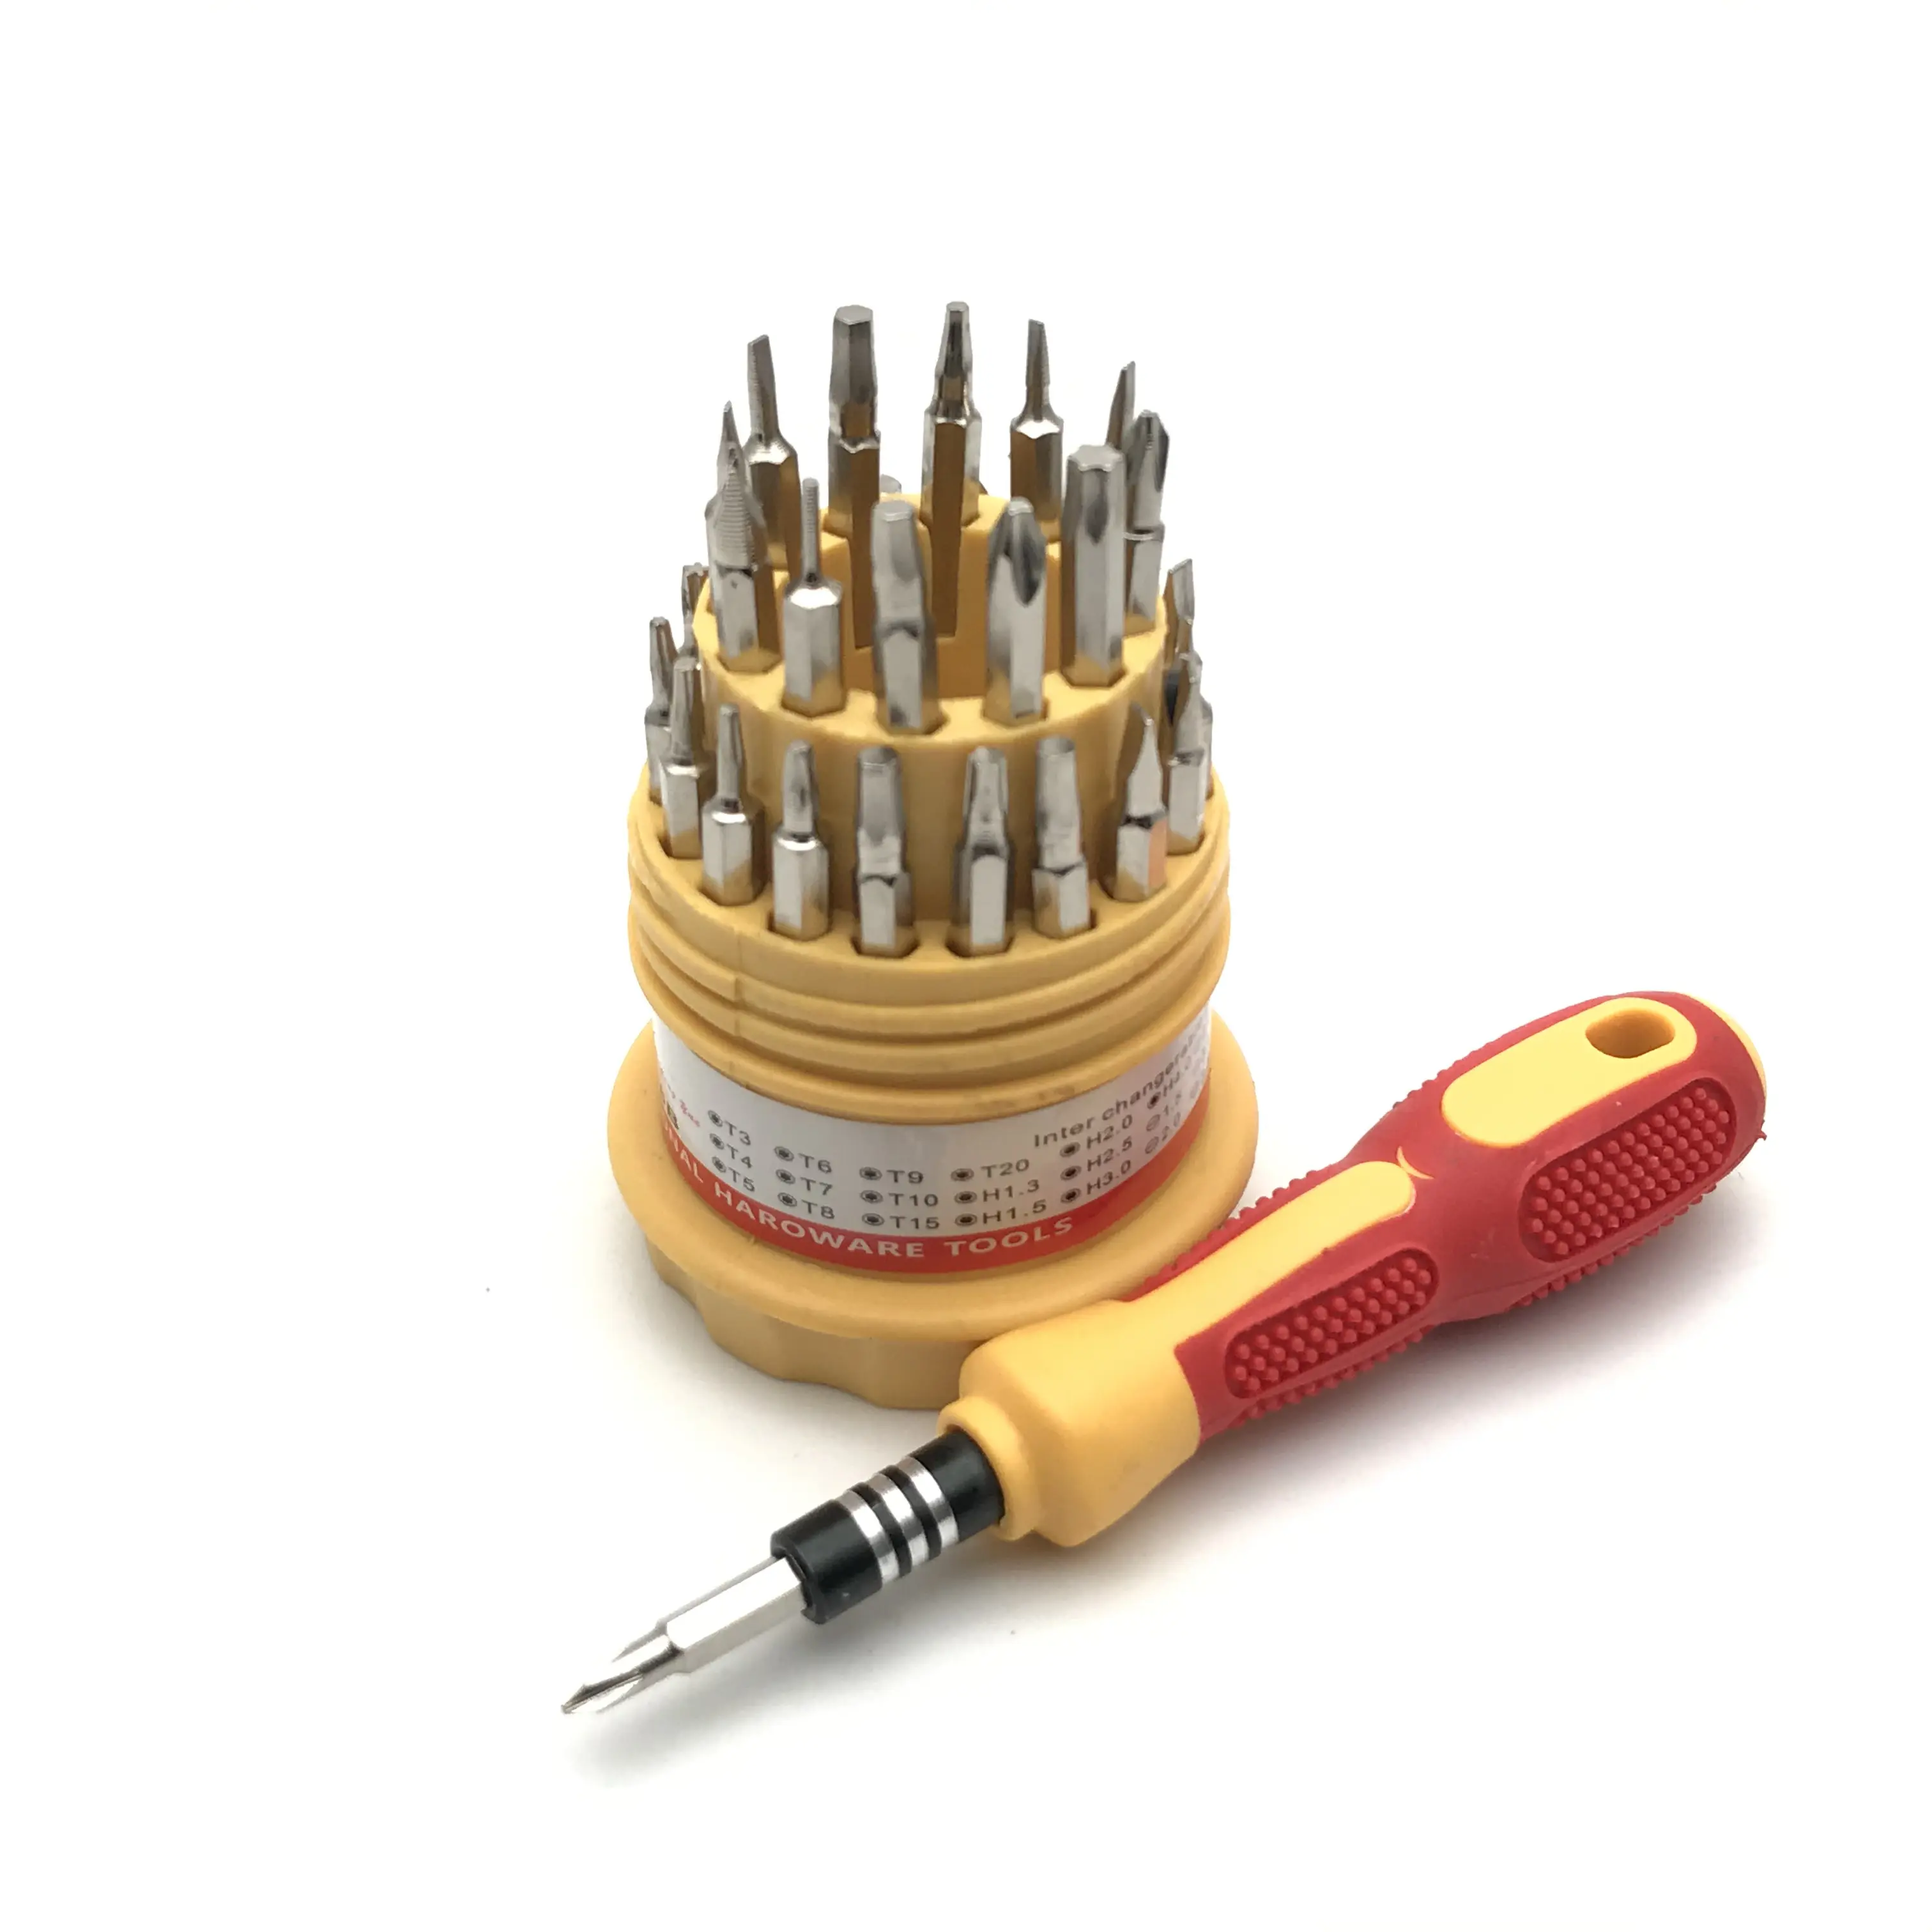 Factory price 31pcs Torx Phillip Slot box spanner set screwdriver spanner tool kit hex key screwdriver set